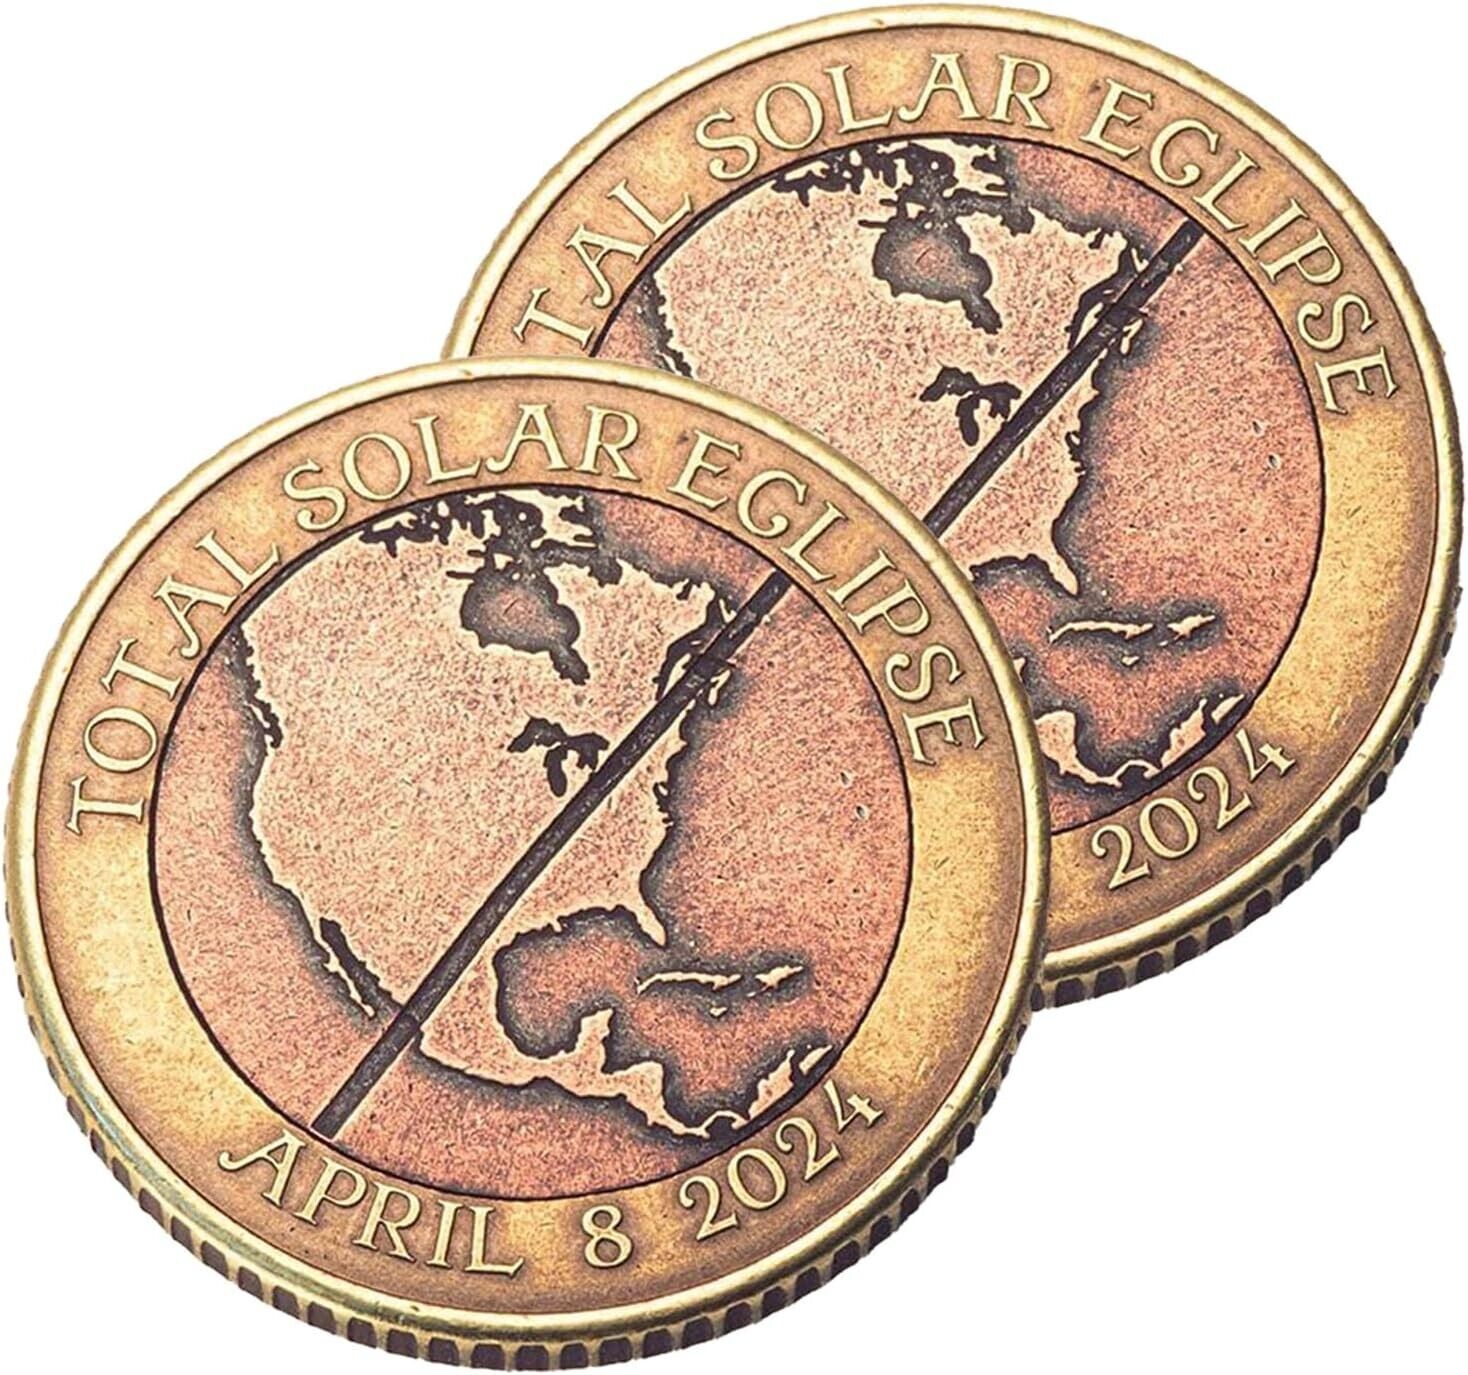 2024 Total Solar Eclipse Commemorative Coin,Total Eclipse Souvenirs Gift for Fam